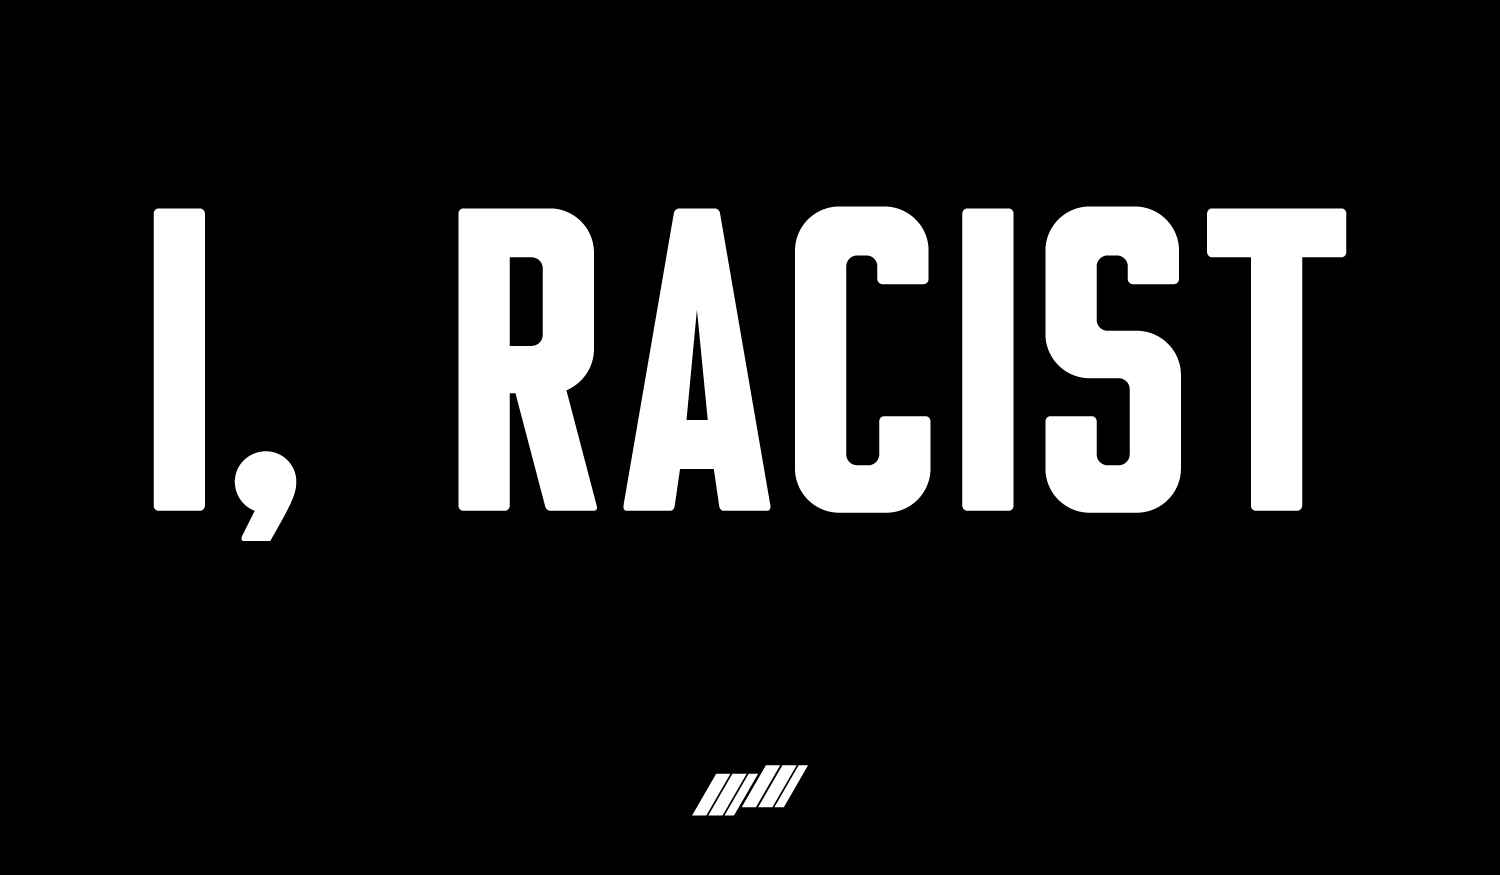 I-Black-Racist-2021